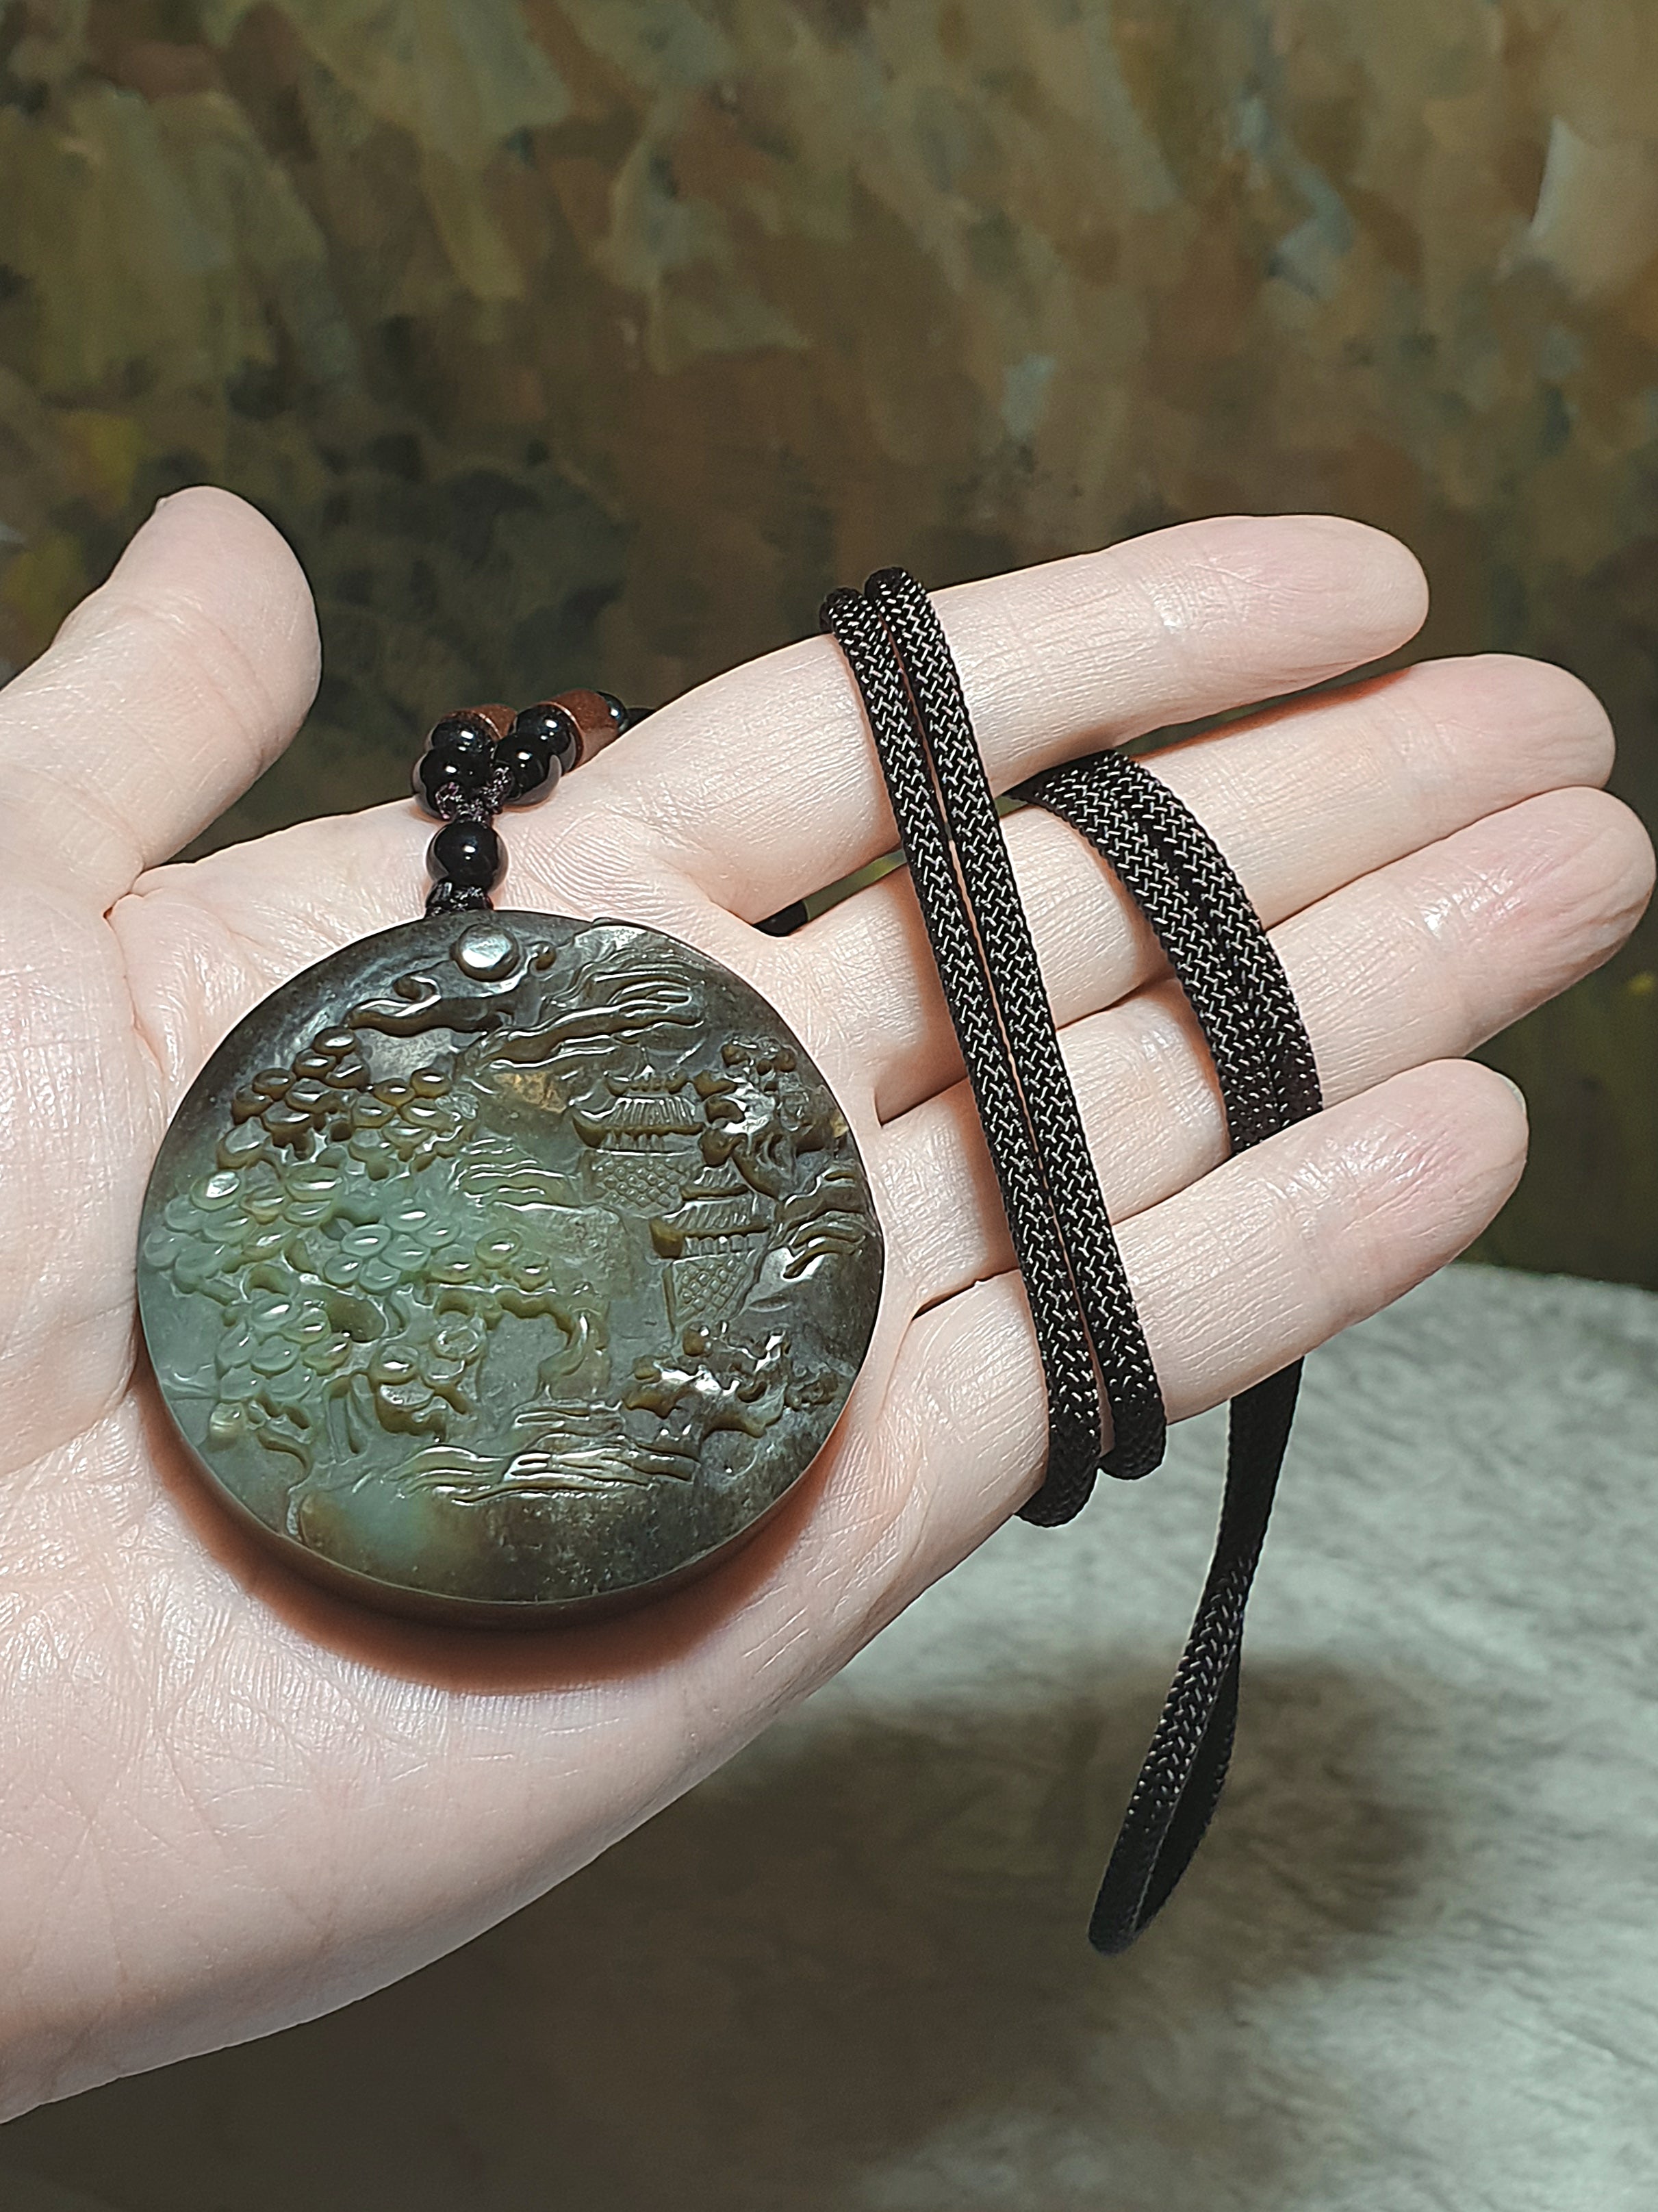 Premium Nephrite deep caramel brown light green Ancient Landscape large  Jade pendant/handheld (with certificate) [Natural Crystal] 